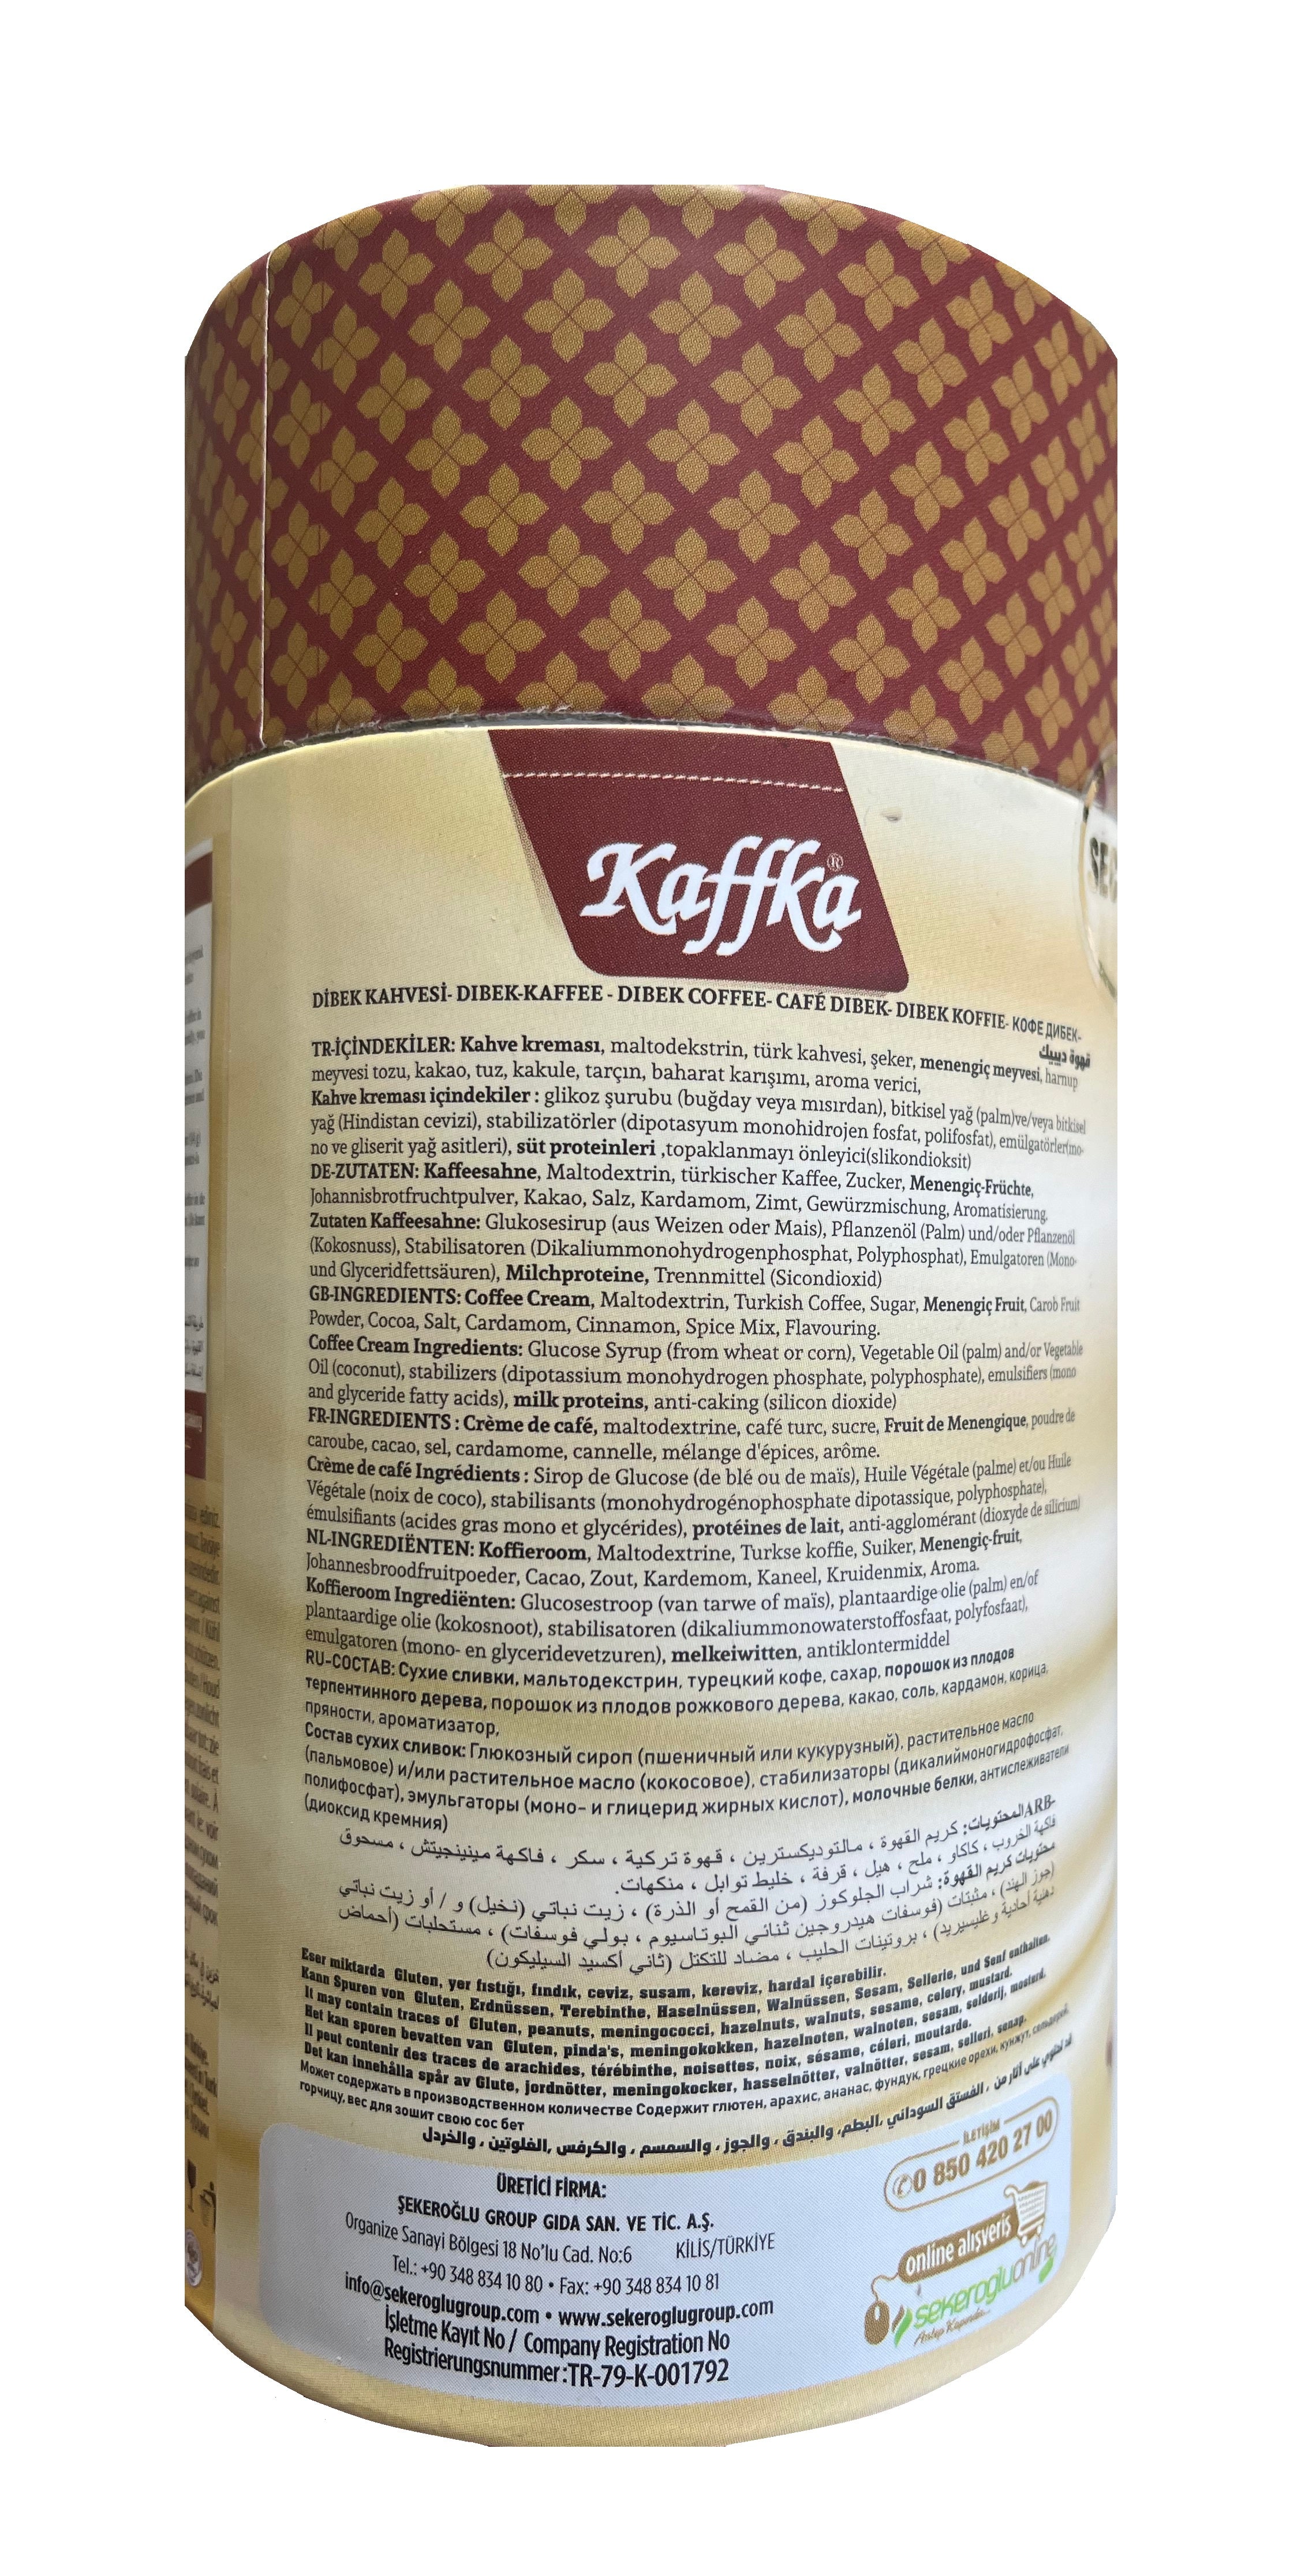 Kaffka Traditional Dibek Coffee Sekeroglu 200g ingredients